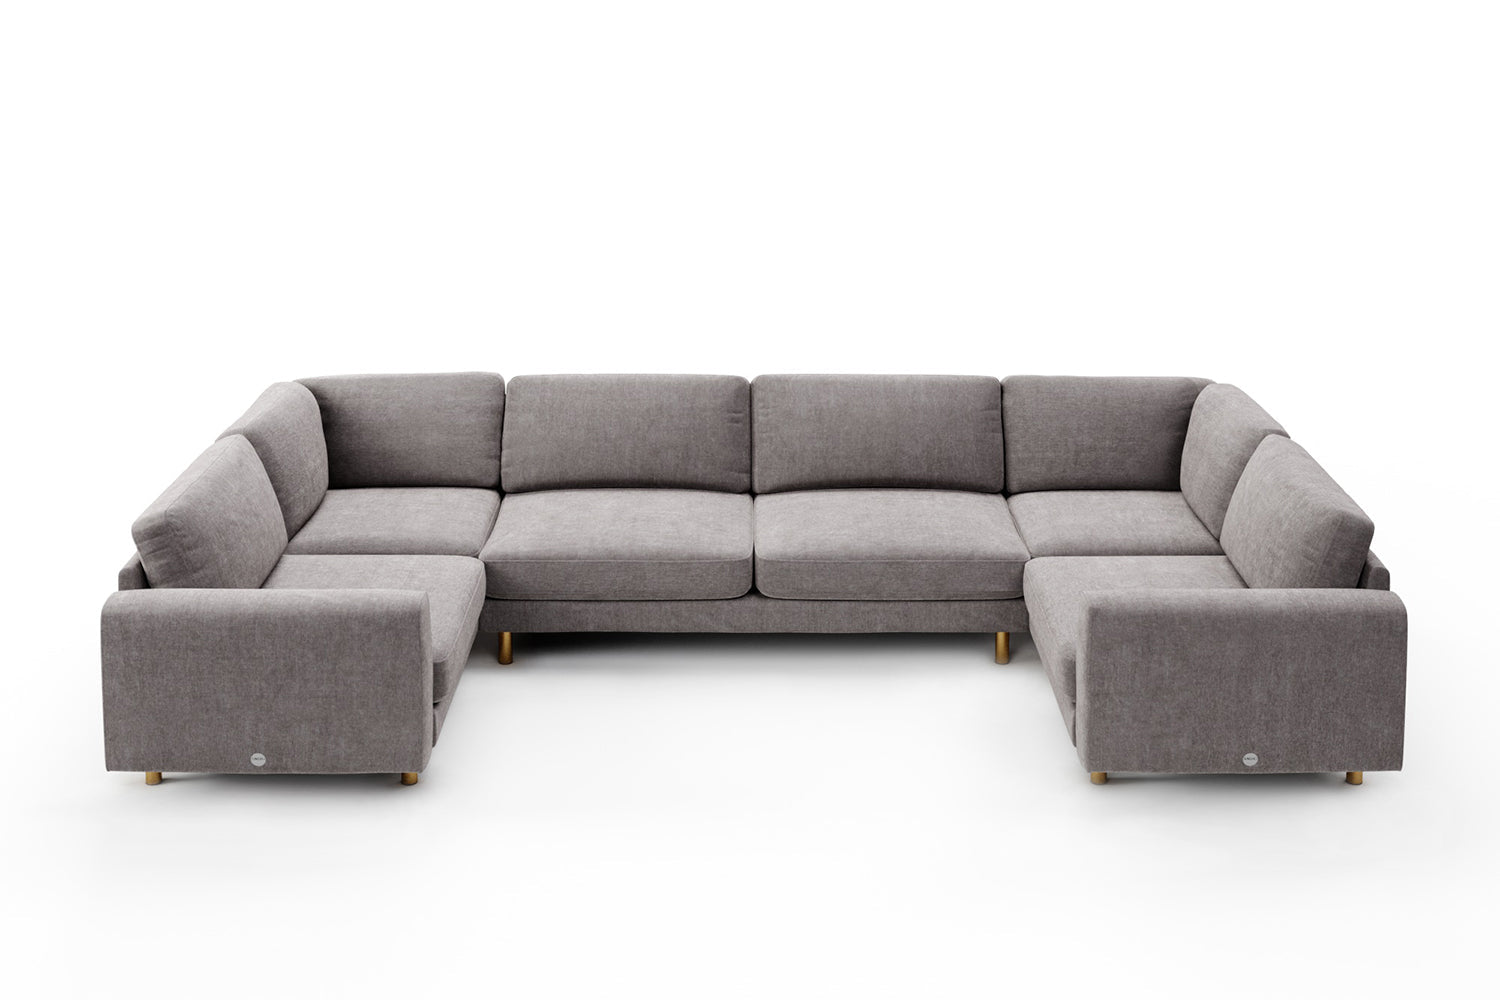 SNUG | The Big Chill Corner Sofa Large in Mid Grey